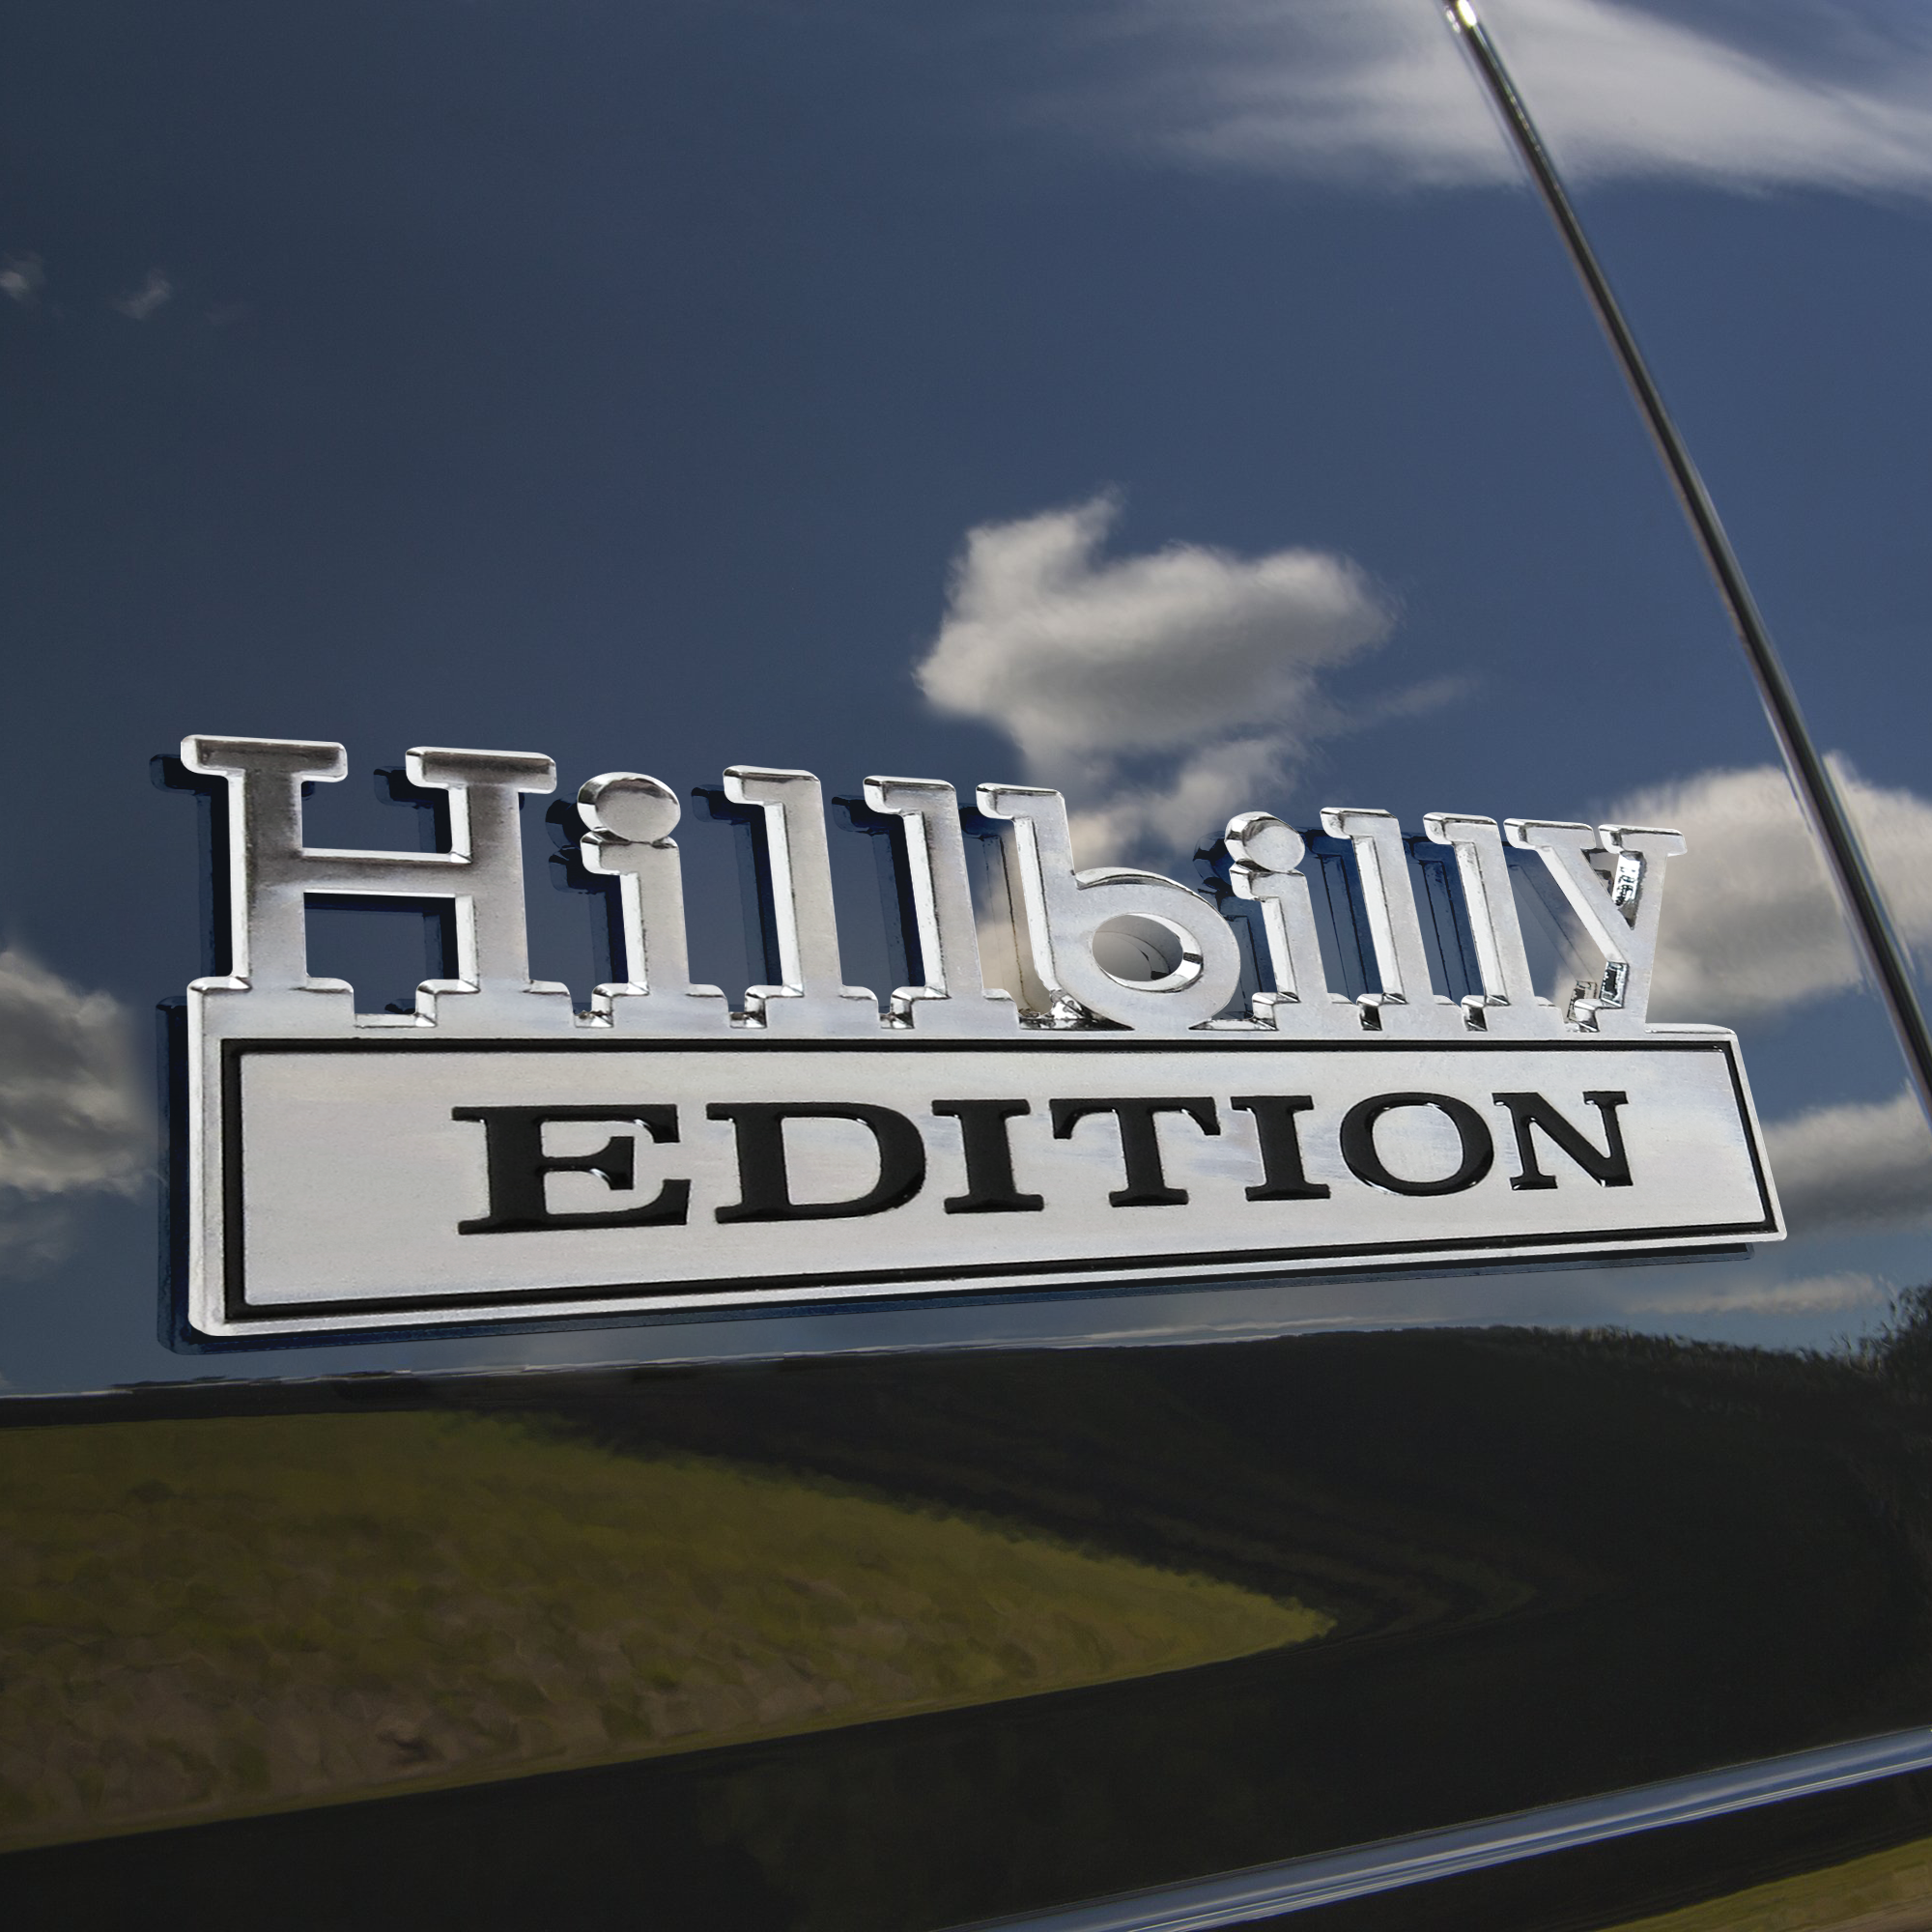 Hillbilly Edition Metal Emblem